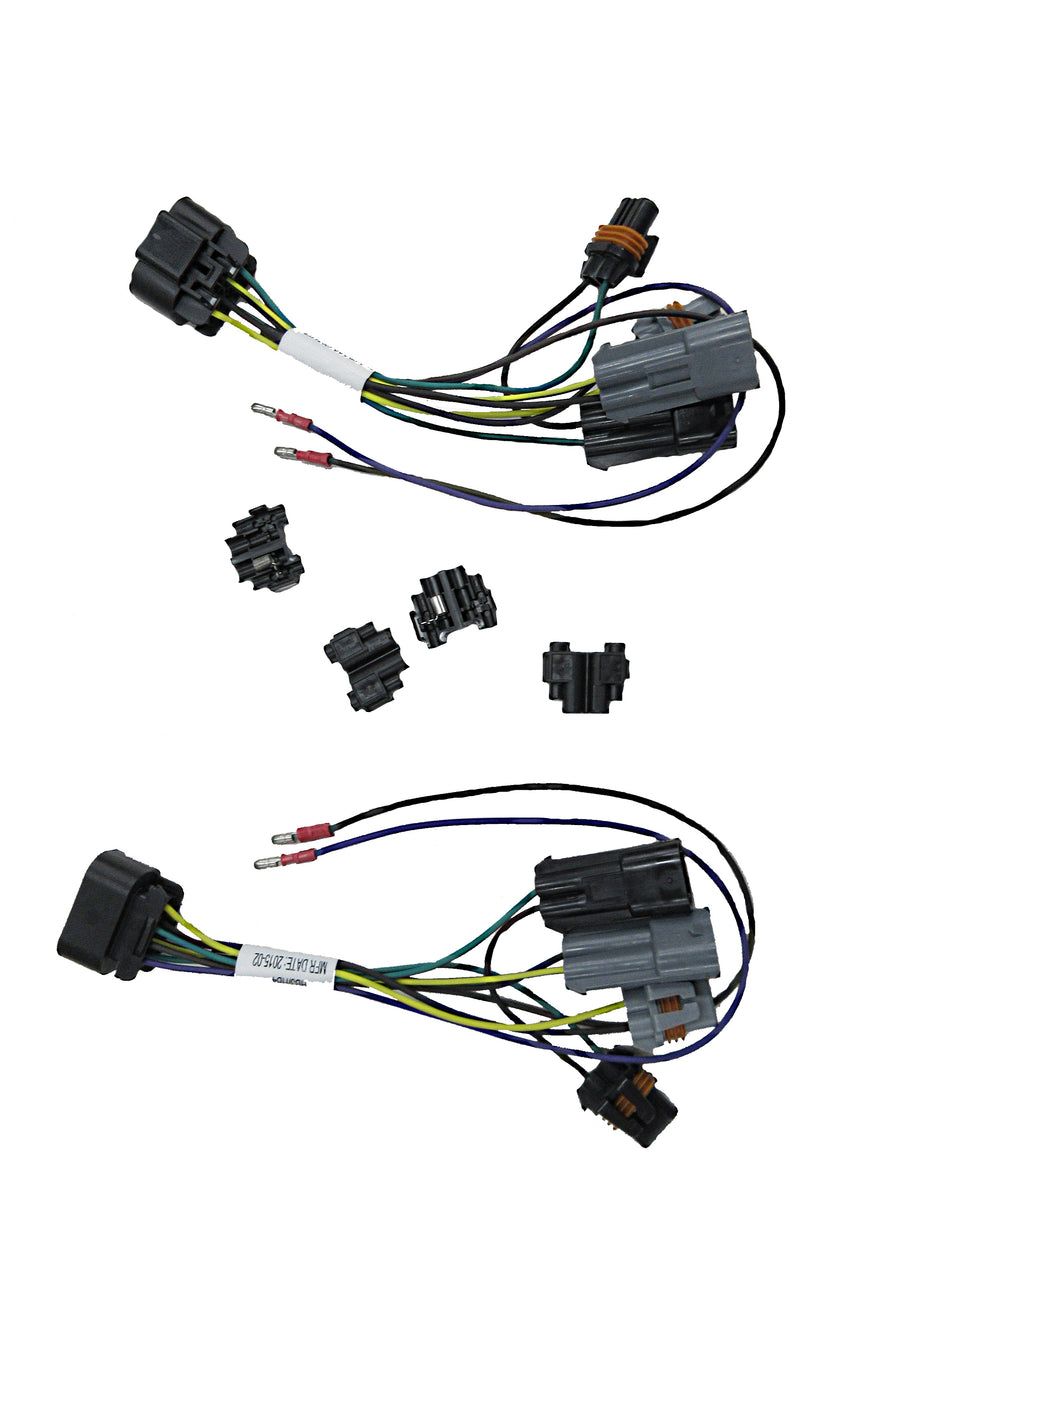 SnowDogg Headlight Adapter for GM/Chevy 16071150